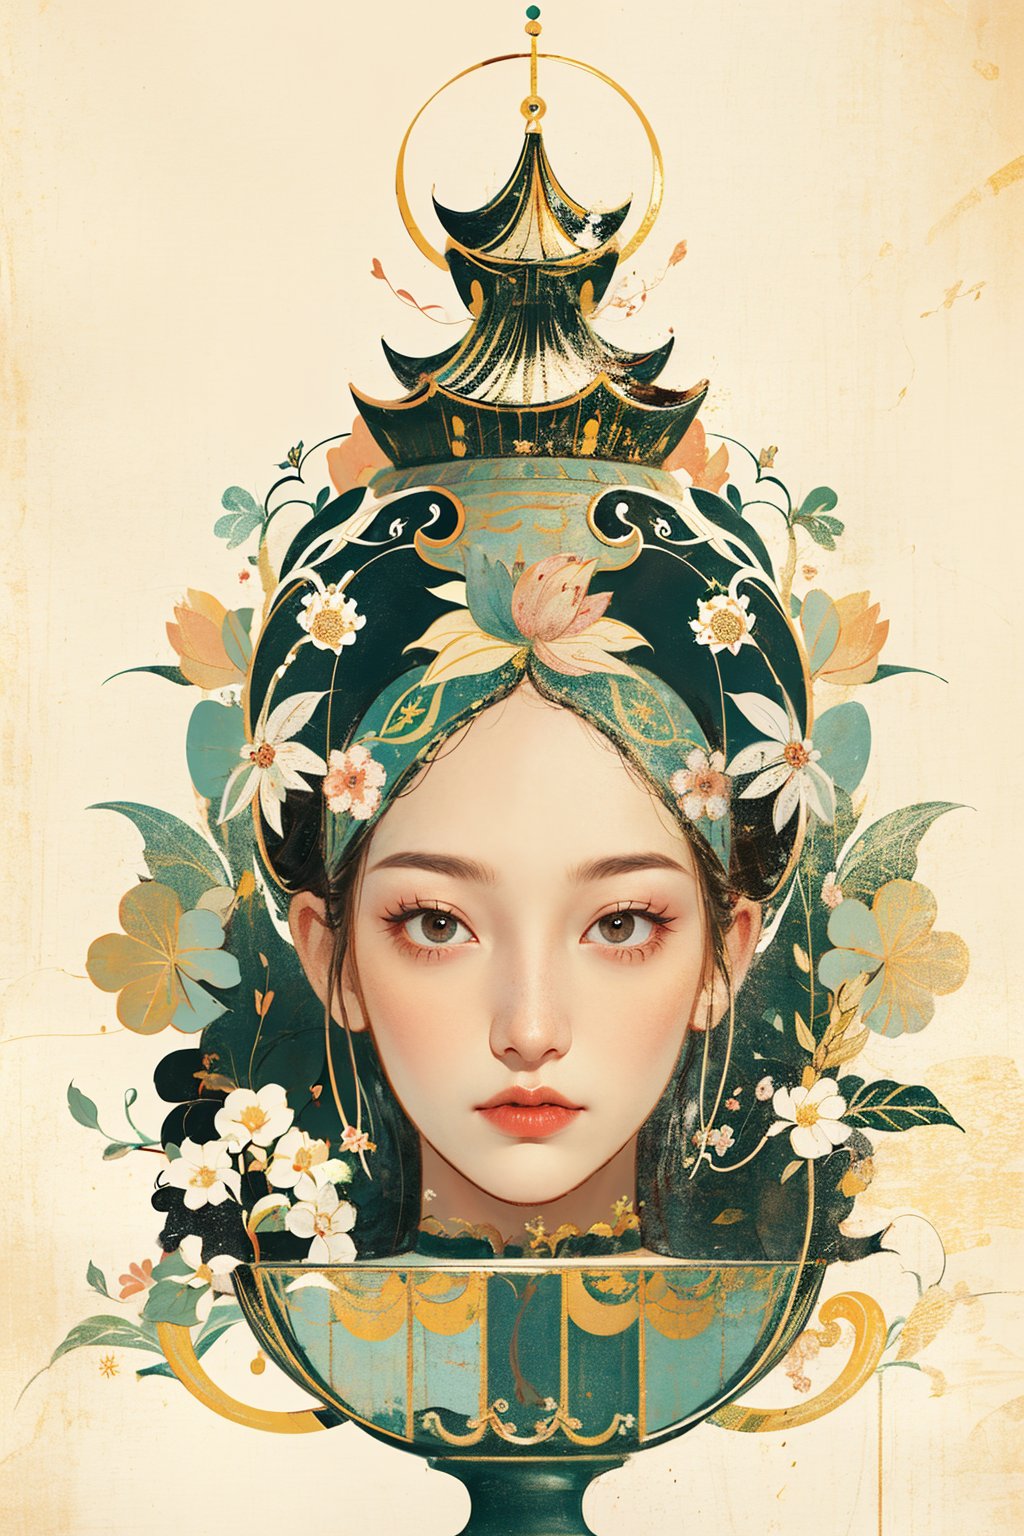 HUBG_CN_illustration,
high contrast, mysterious, fantasy, bright natural light,
symmetrical composition,